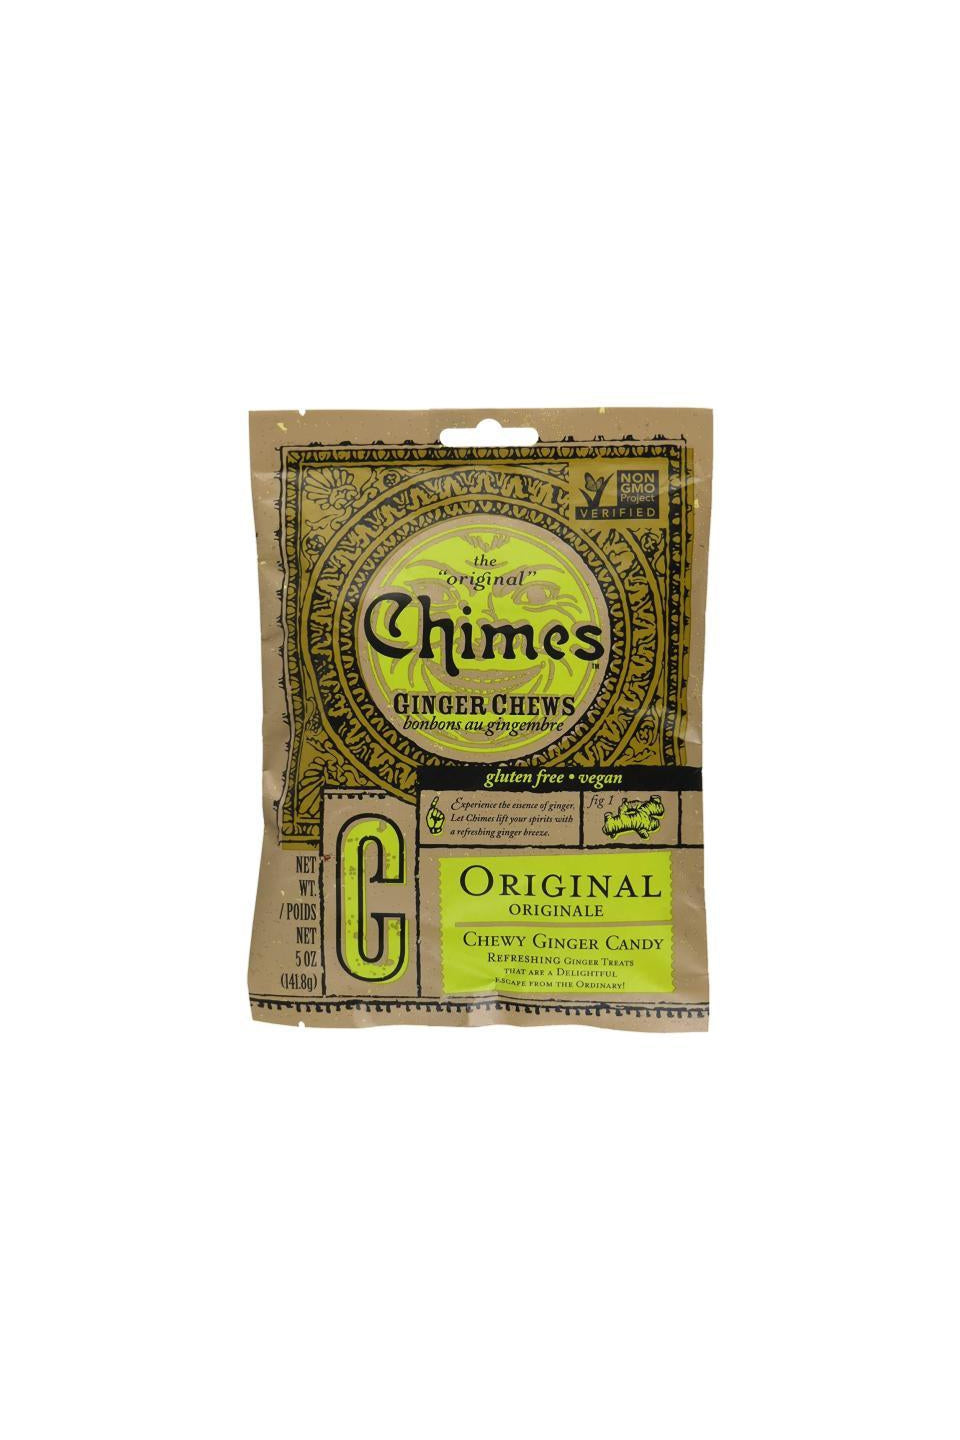 Chimes Original Ginger Chews 141.8g